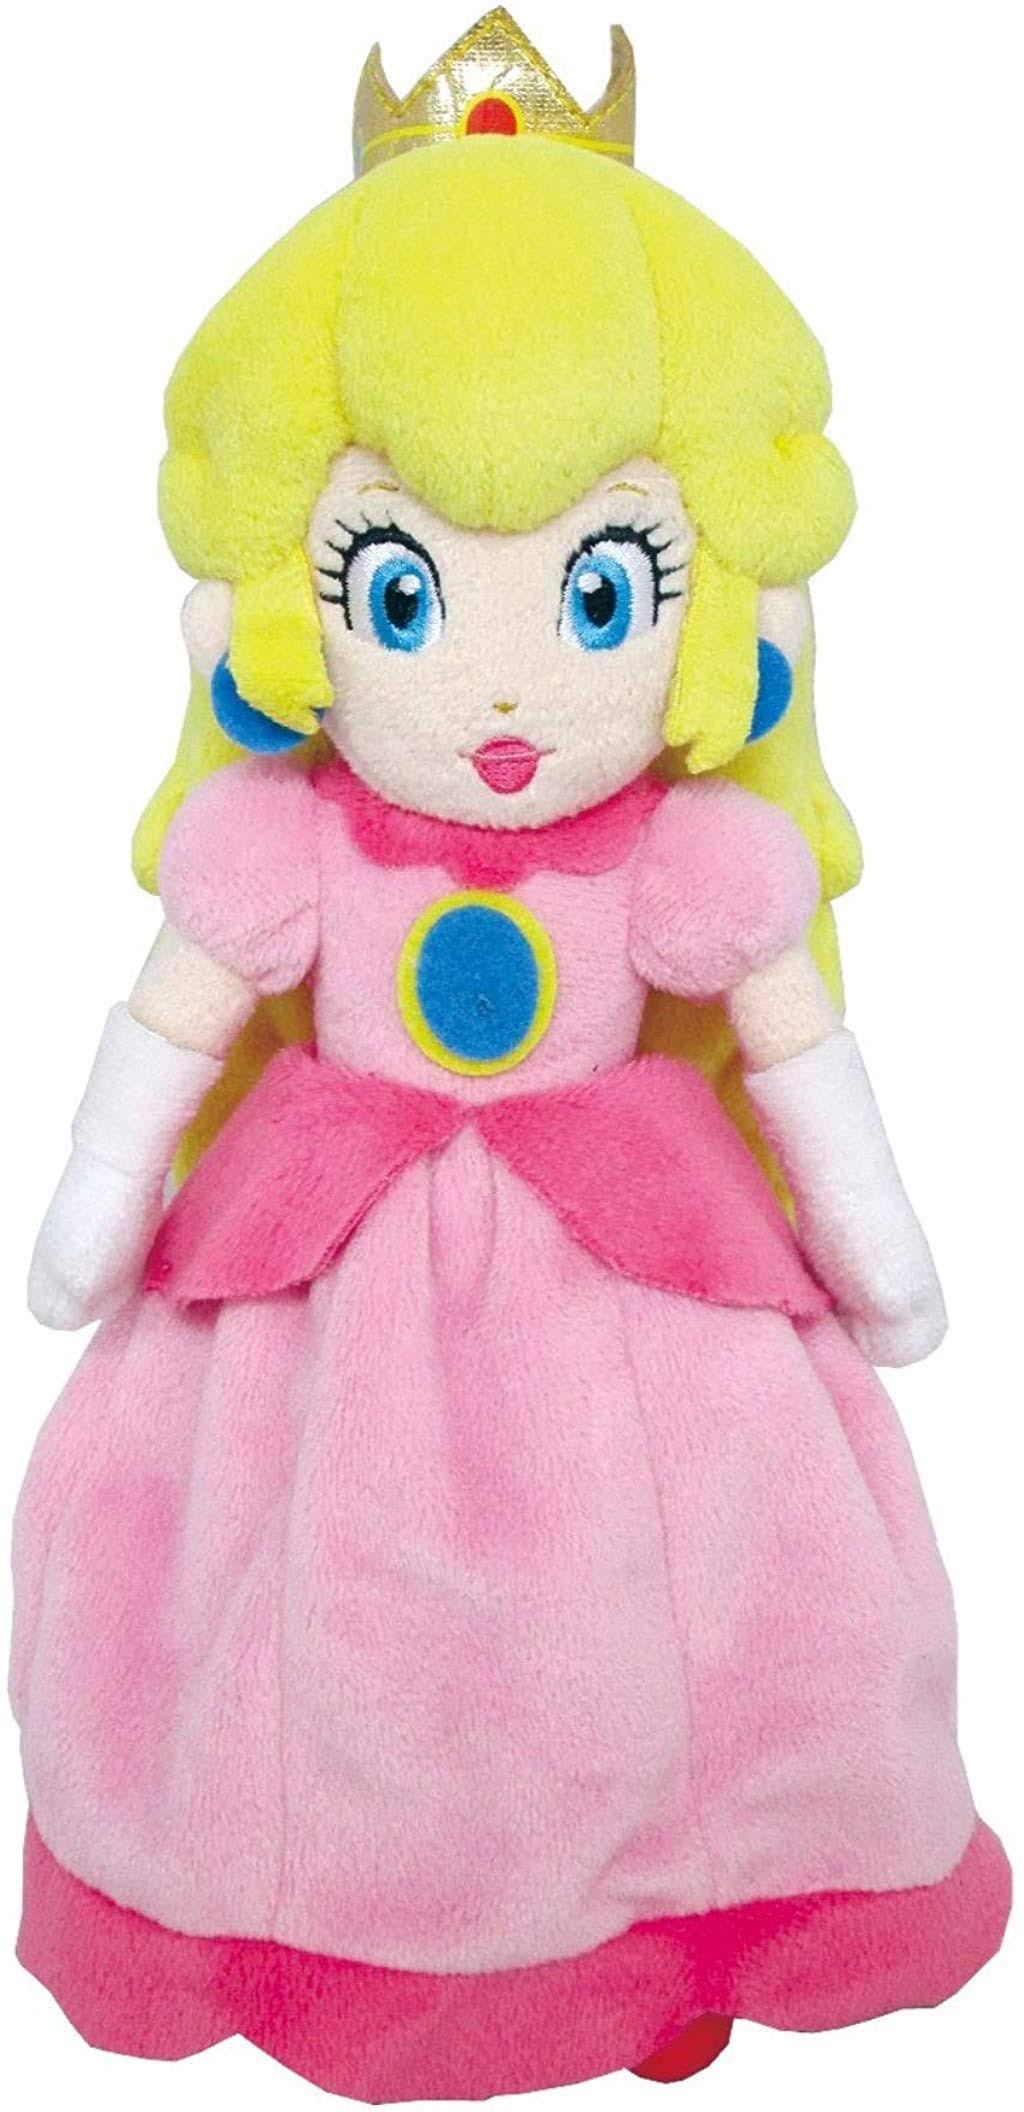 Super Mario Bros Princess Peach Plush Toy - 10"